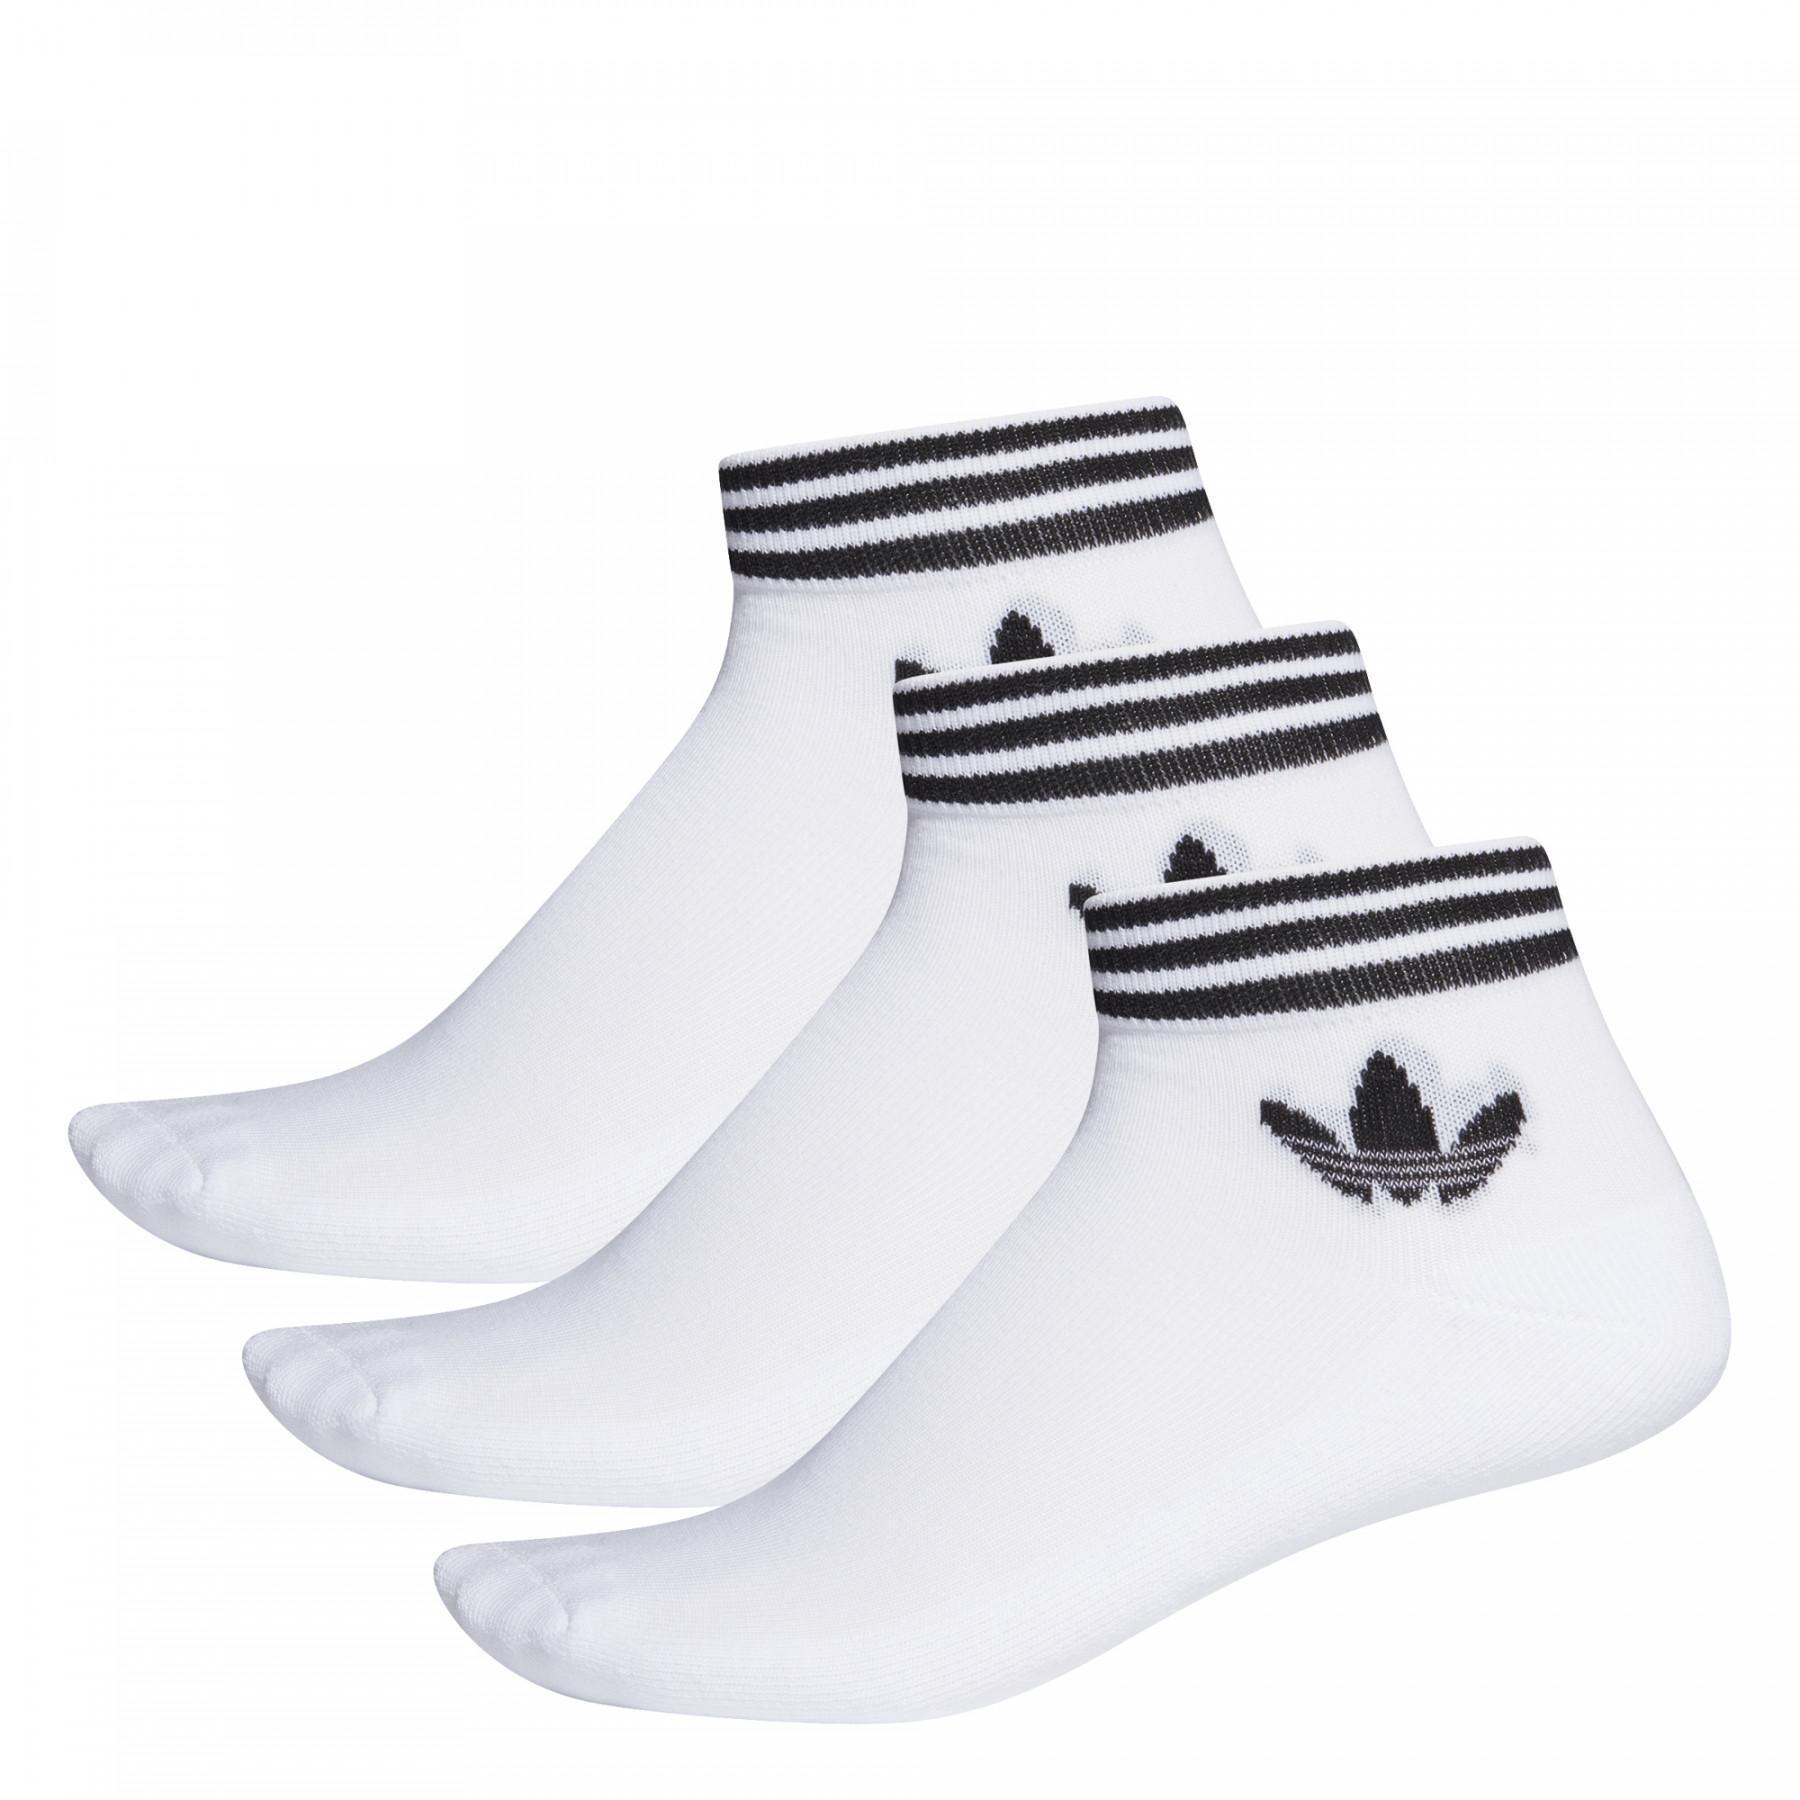 Socks Adidas Trefoil (x3)